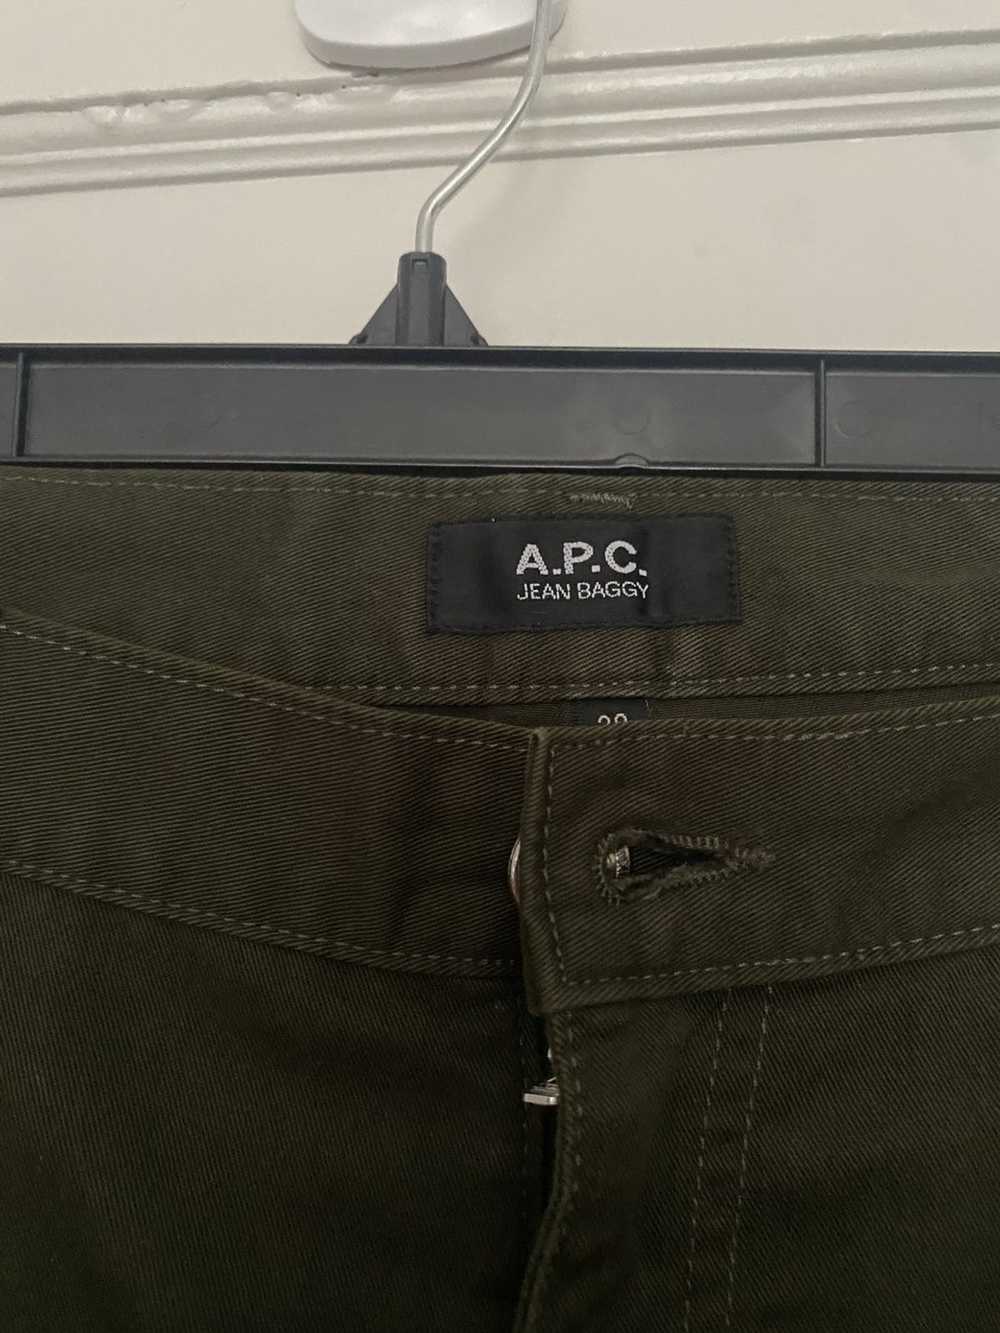 A.P.C. A.P.C. Green Baggy Jeans - image 3